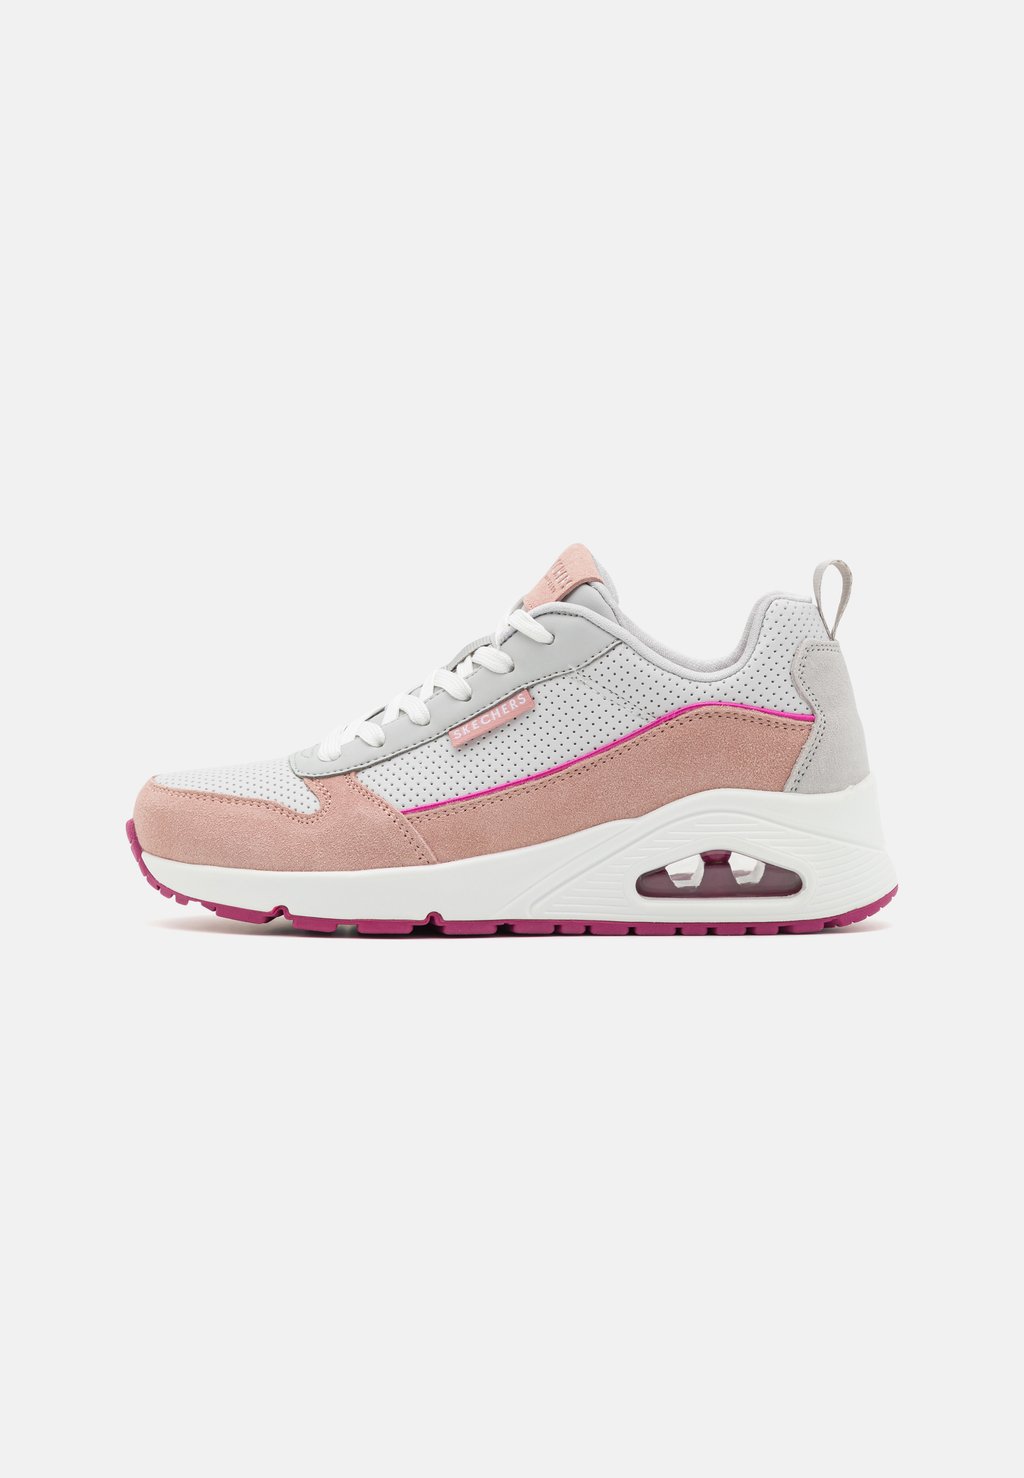 Низкие кроссовки Uno Skechers Sport, цвет pink/white/grey кроссовки низкие uno skechers sport цвет white coral